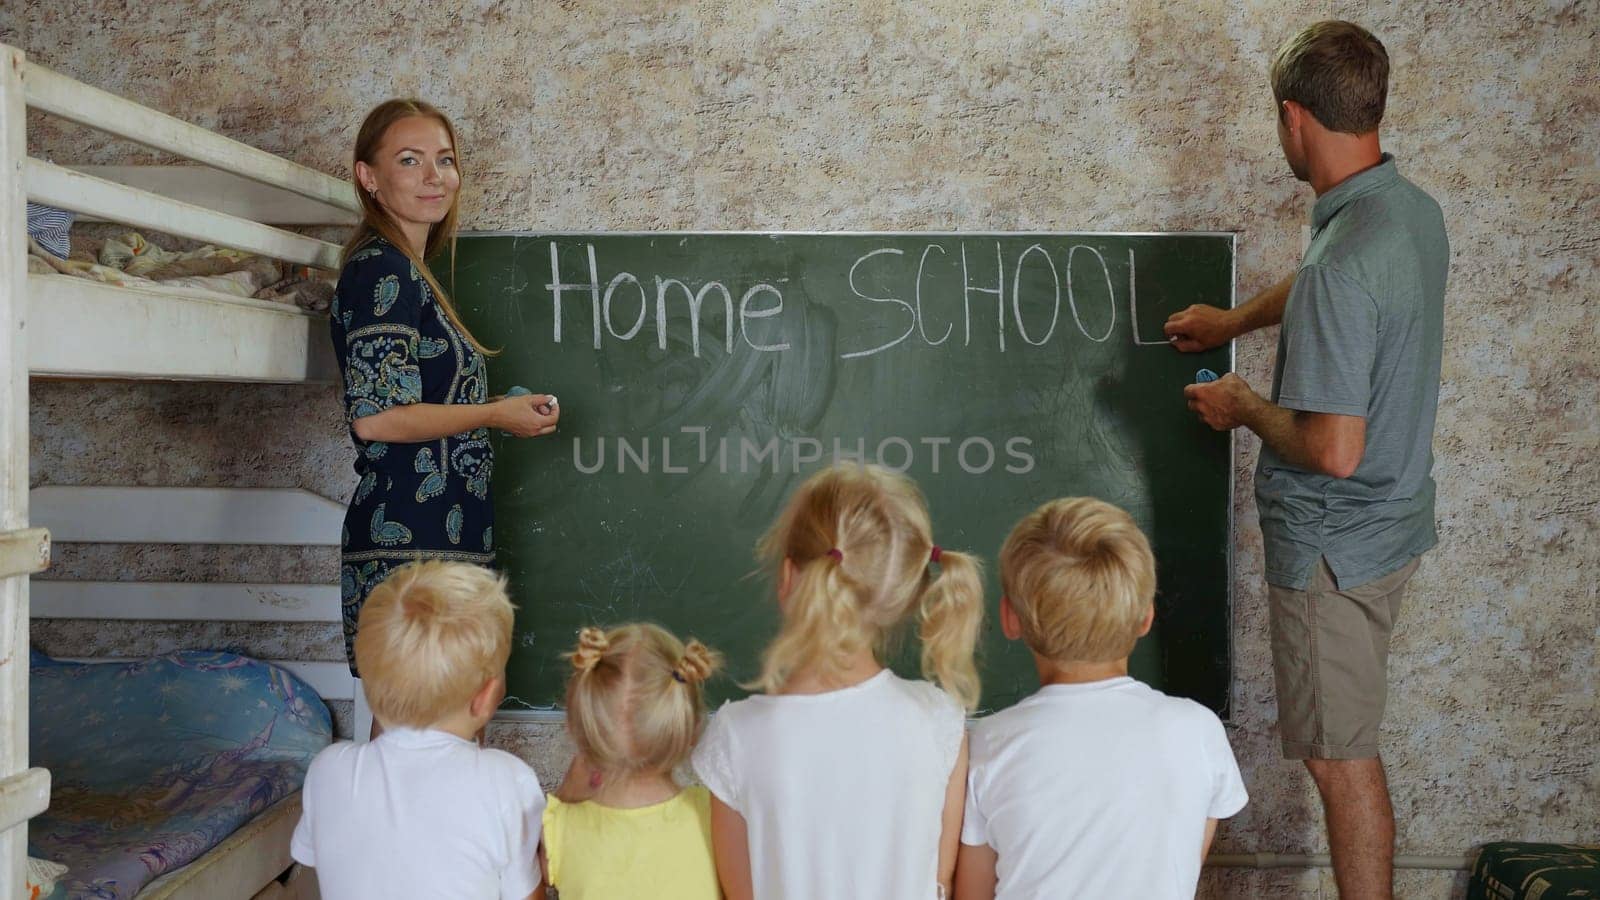 Home school concept. Parents write Home School on the blackboard